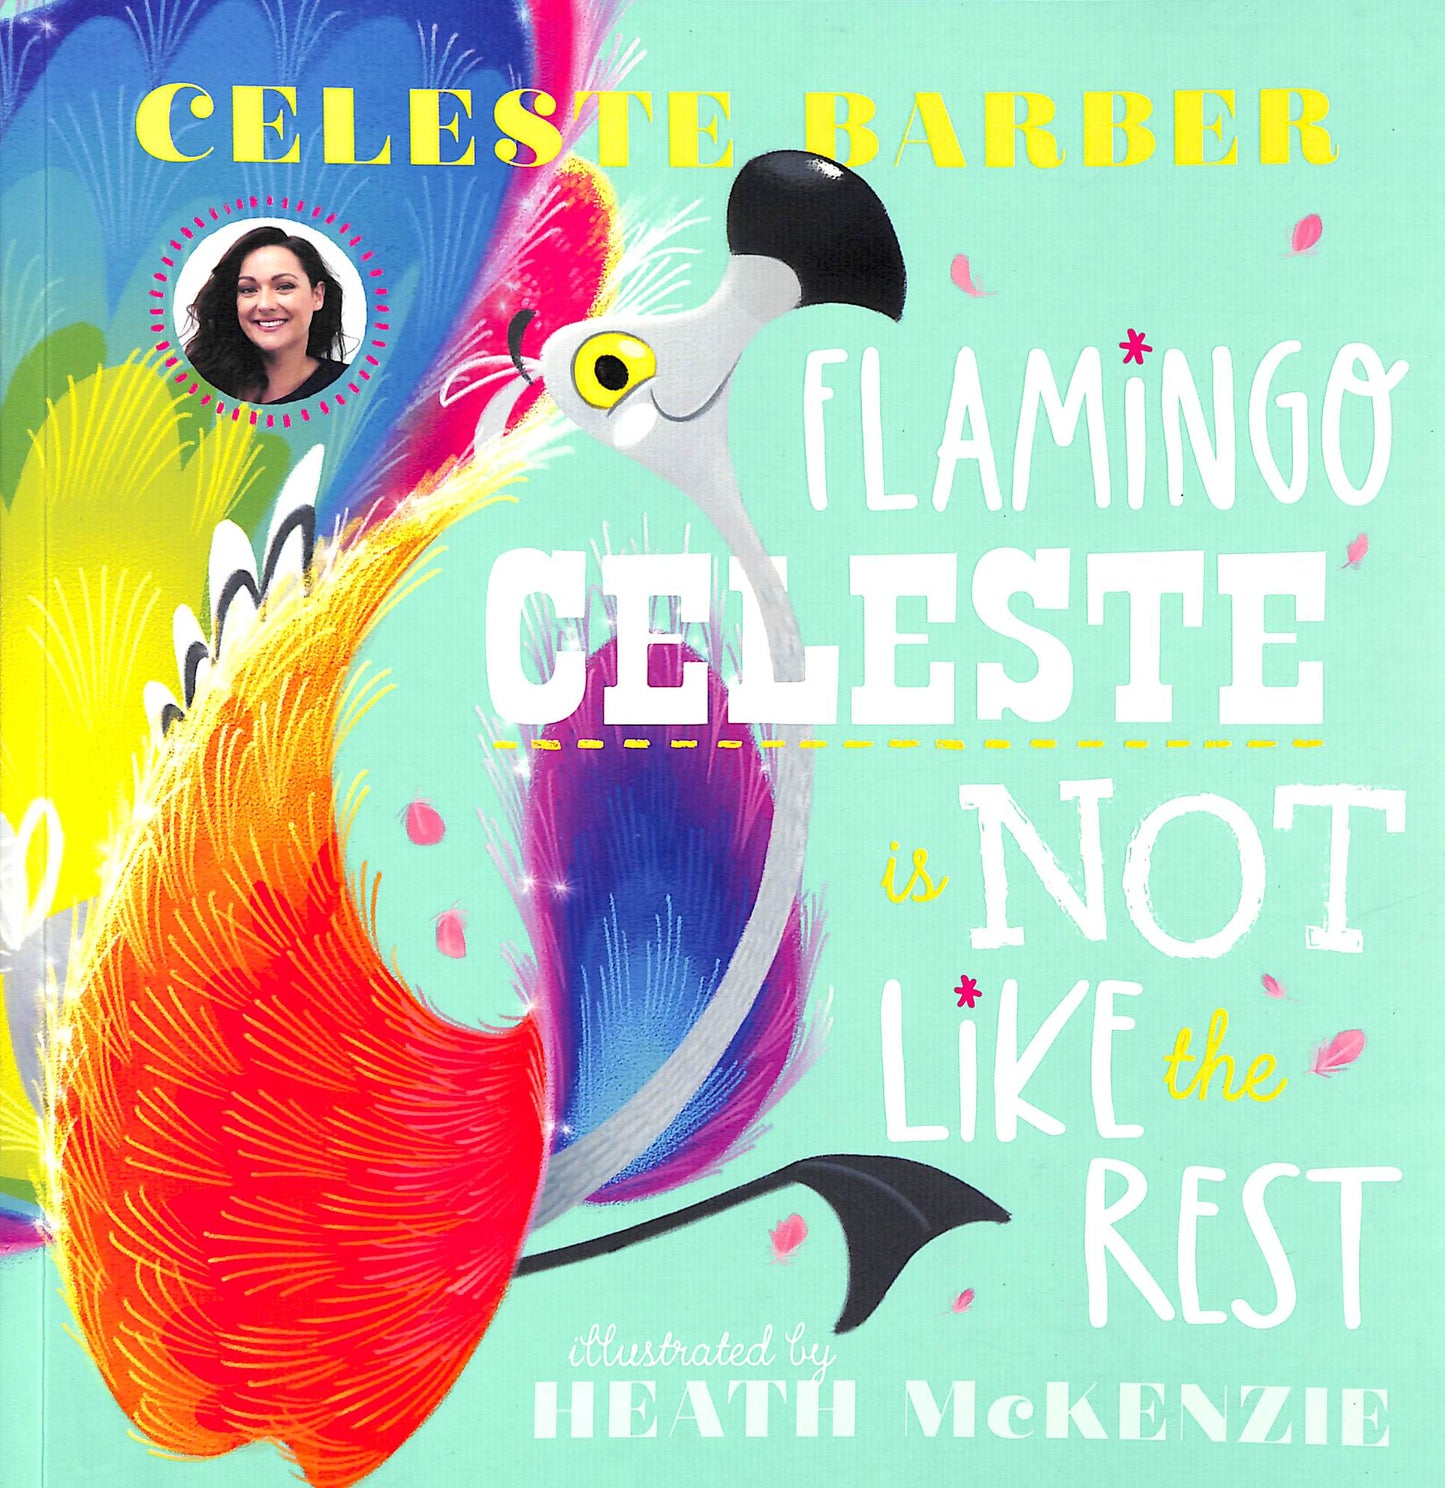 Flamingo Celeste is Not Like the Rest by Celeste Barber